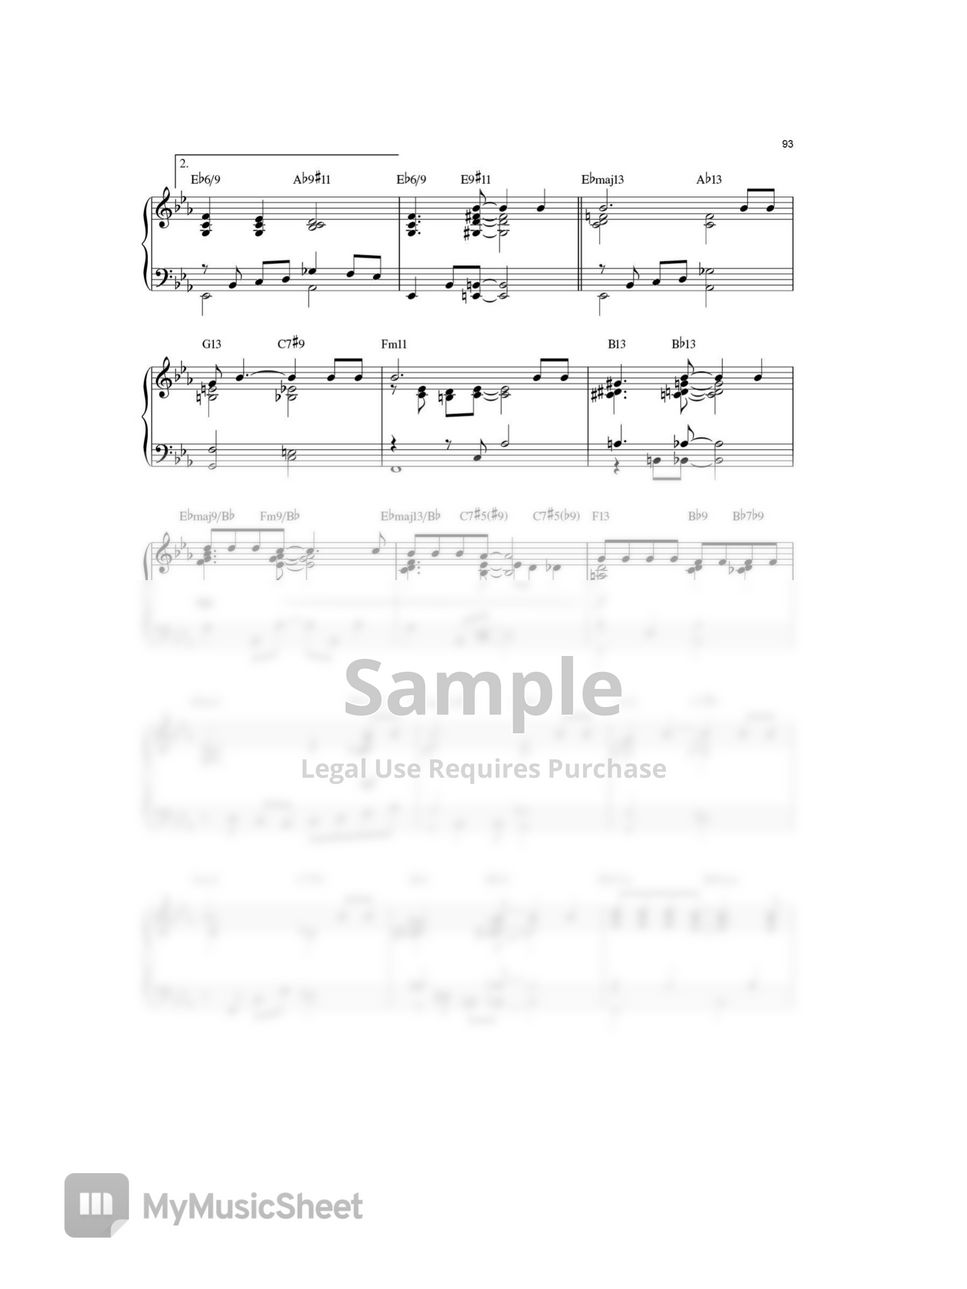 Winter Wonderland Jazz Piano.pdf